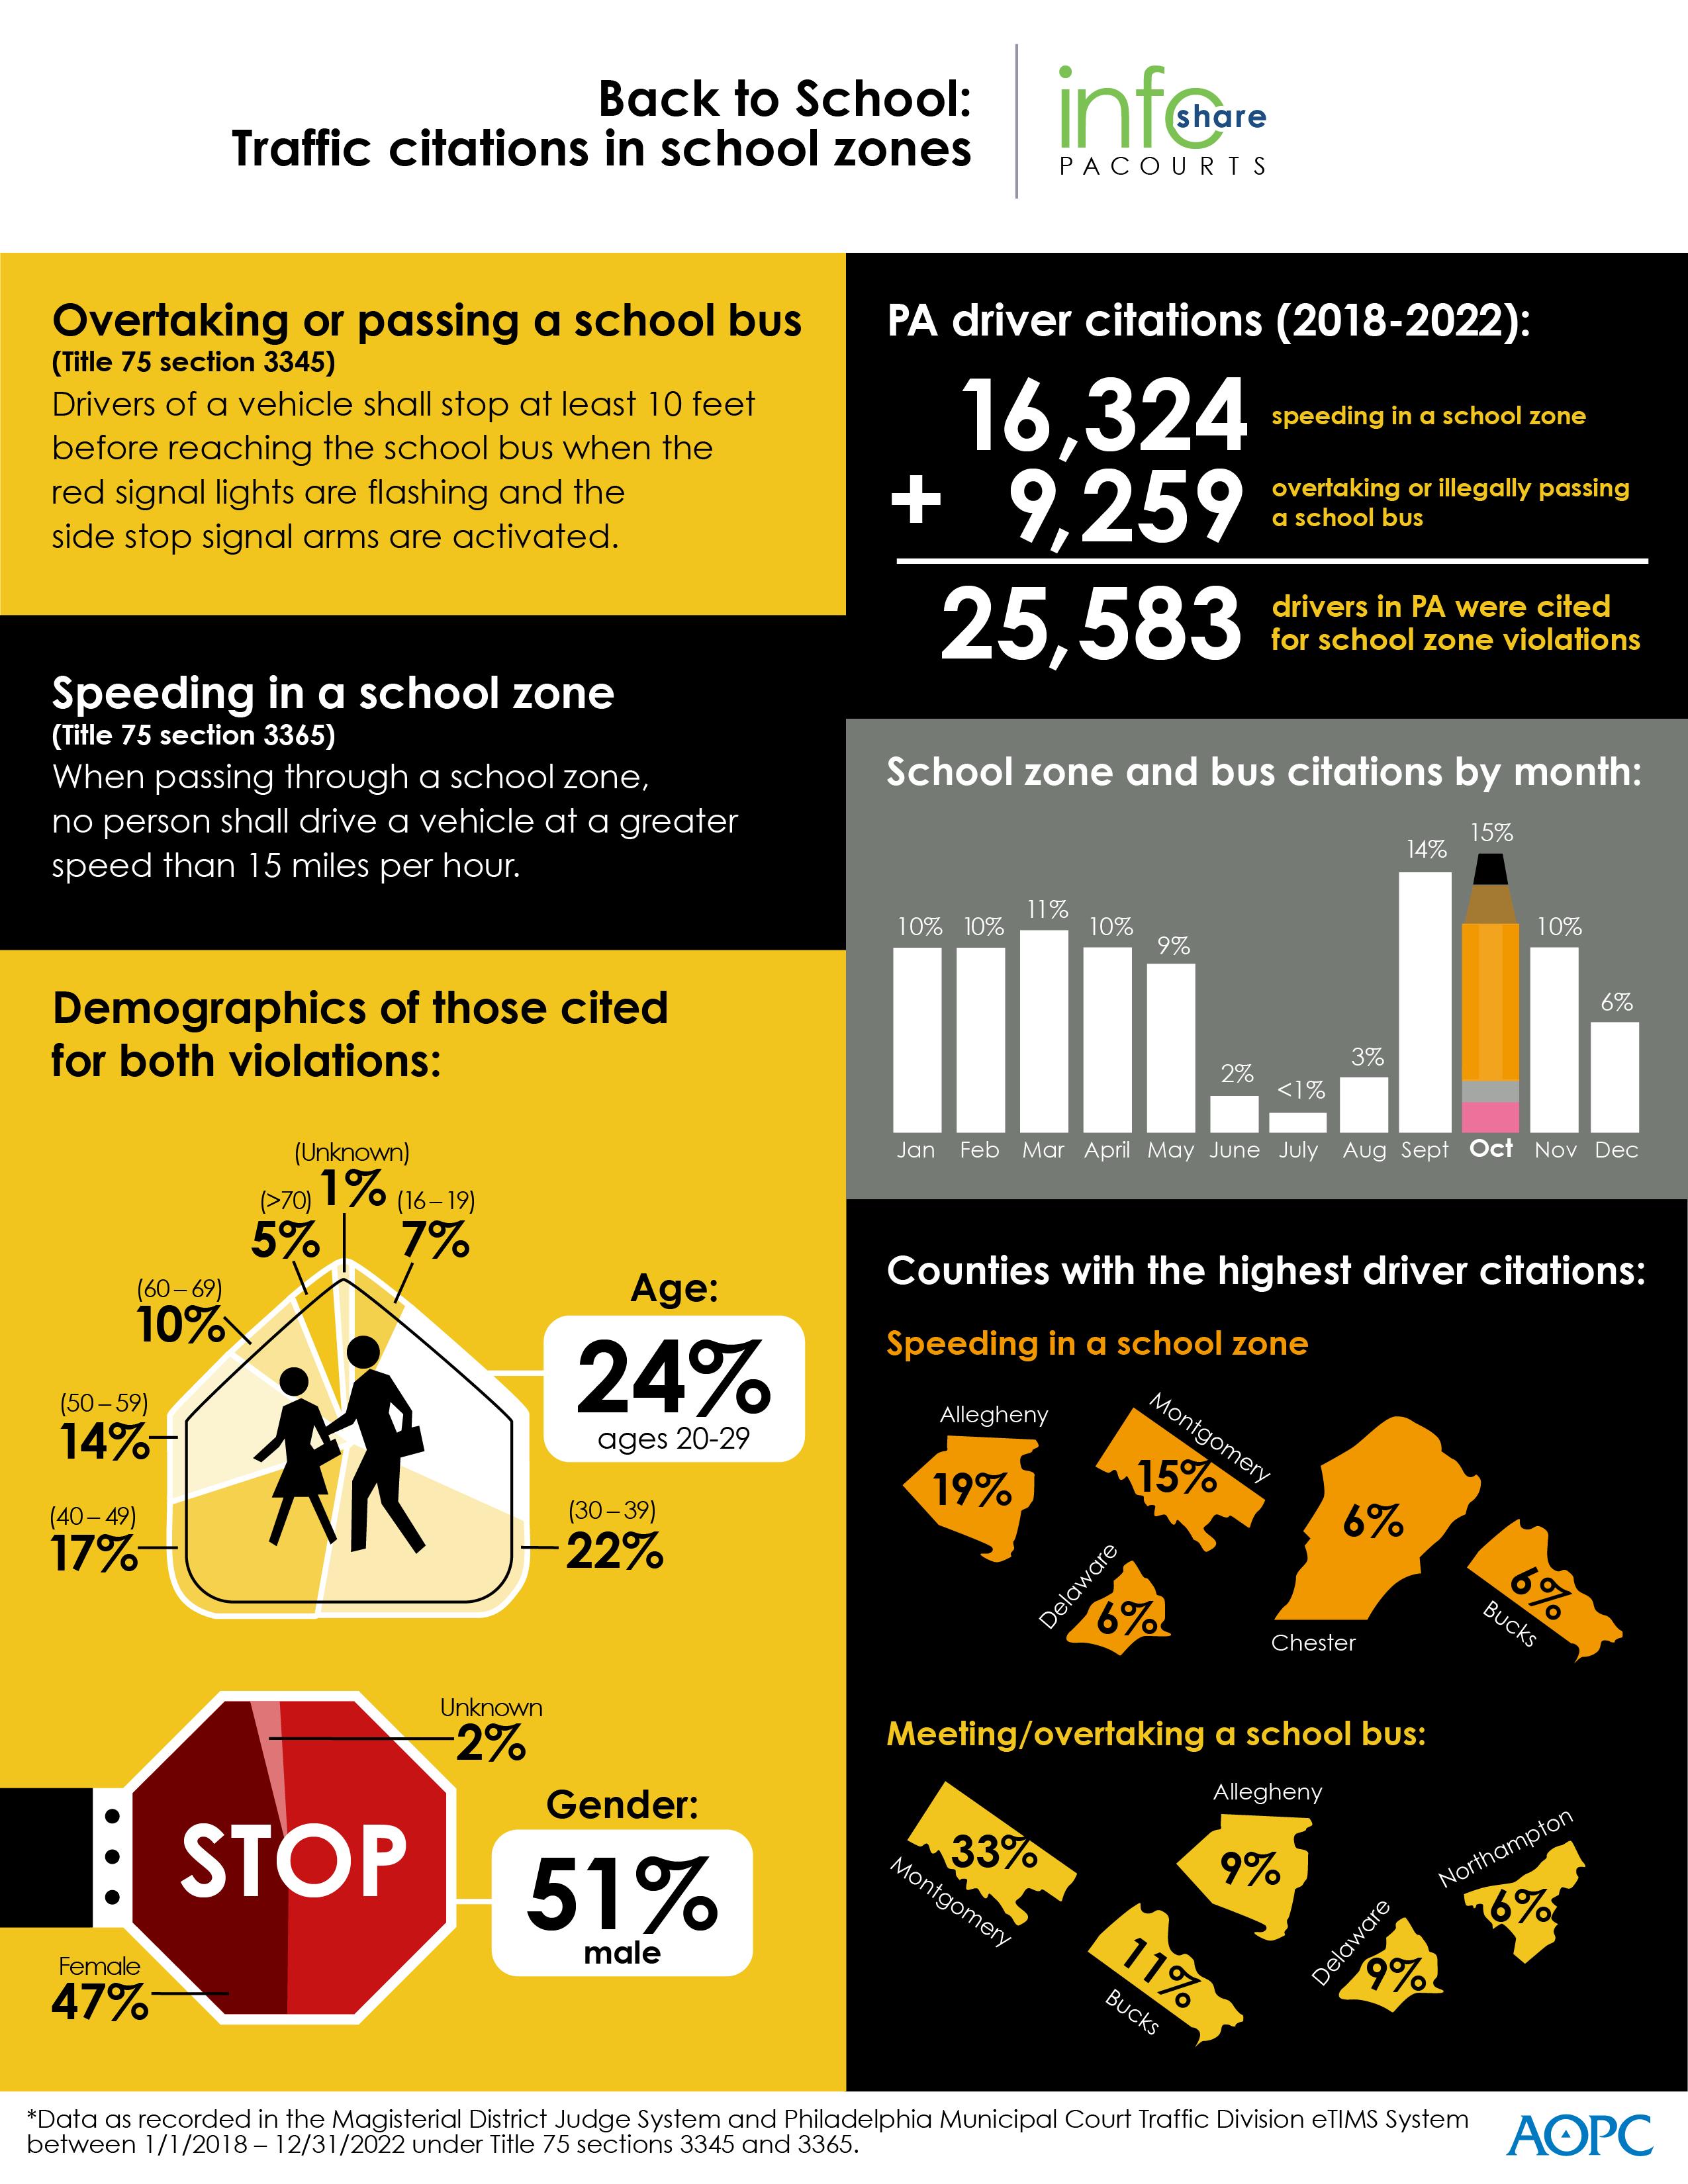 infoshare infographic on traffic citations in school zones